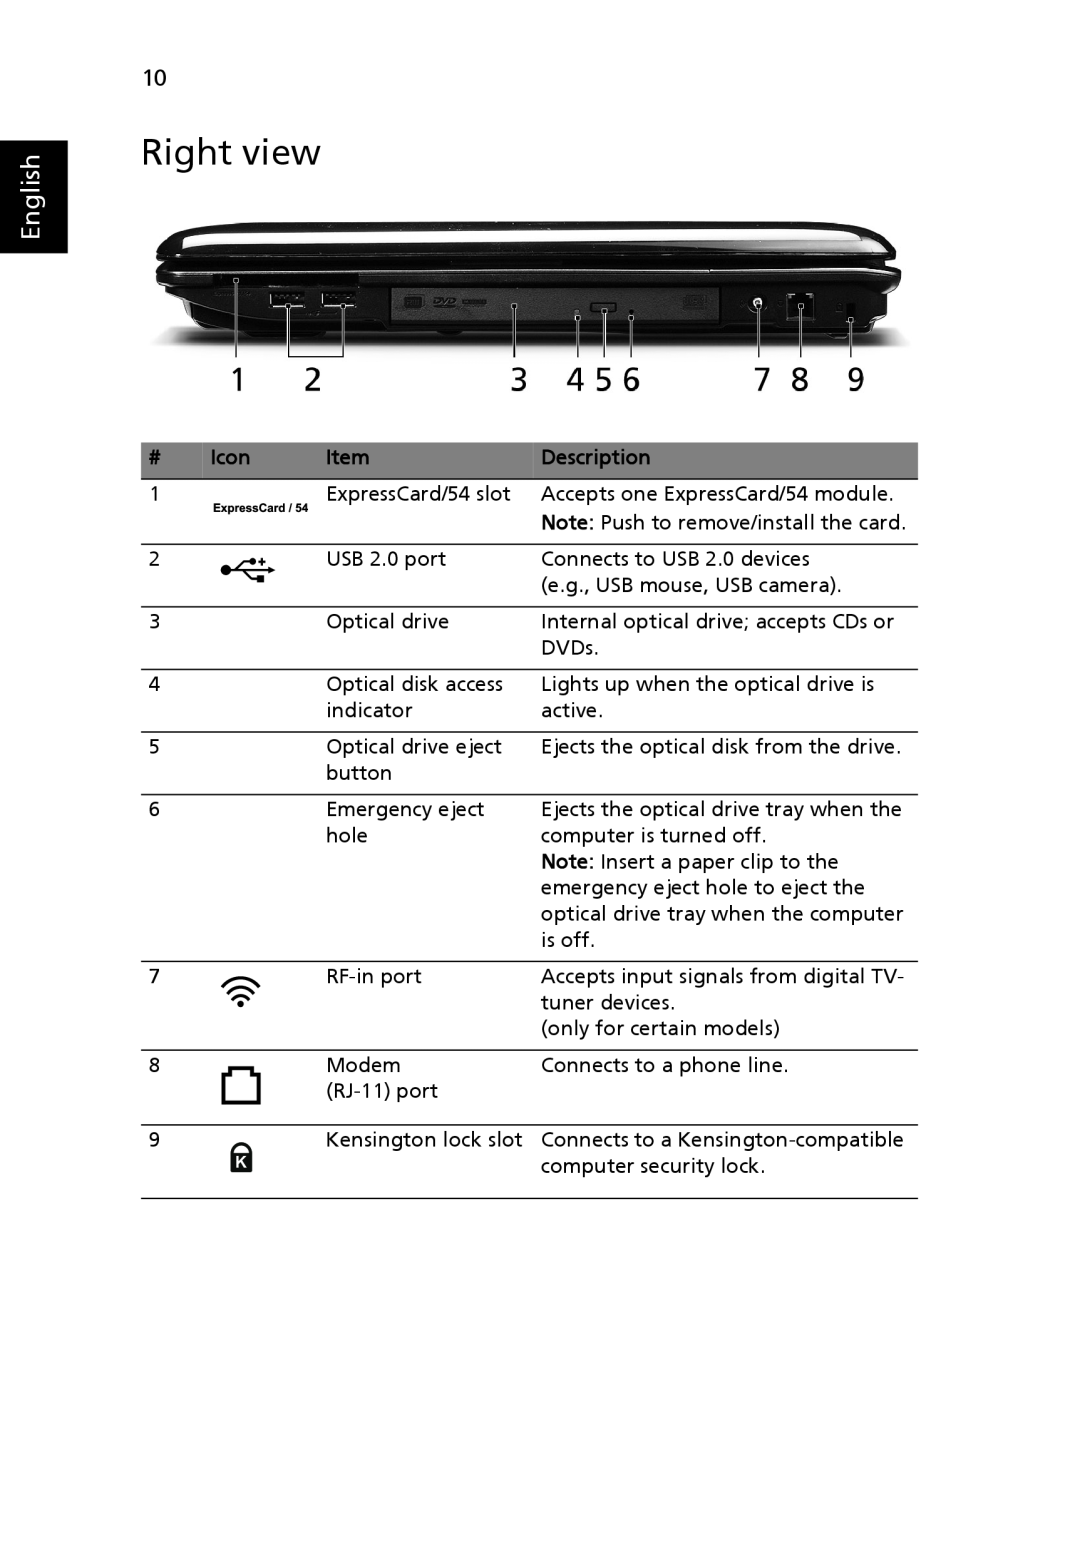 Acer 7730 Series manual Right view, English, Icon, Description 